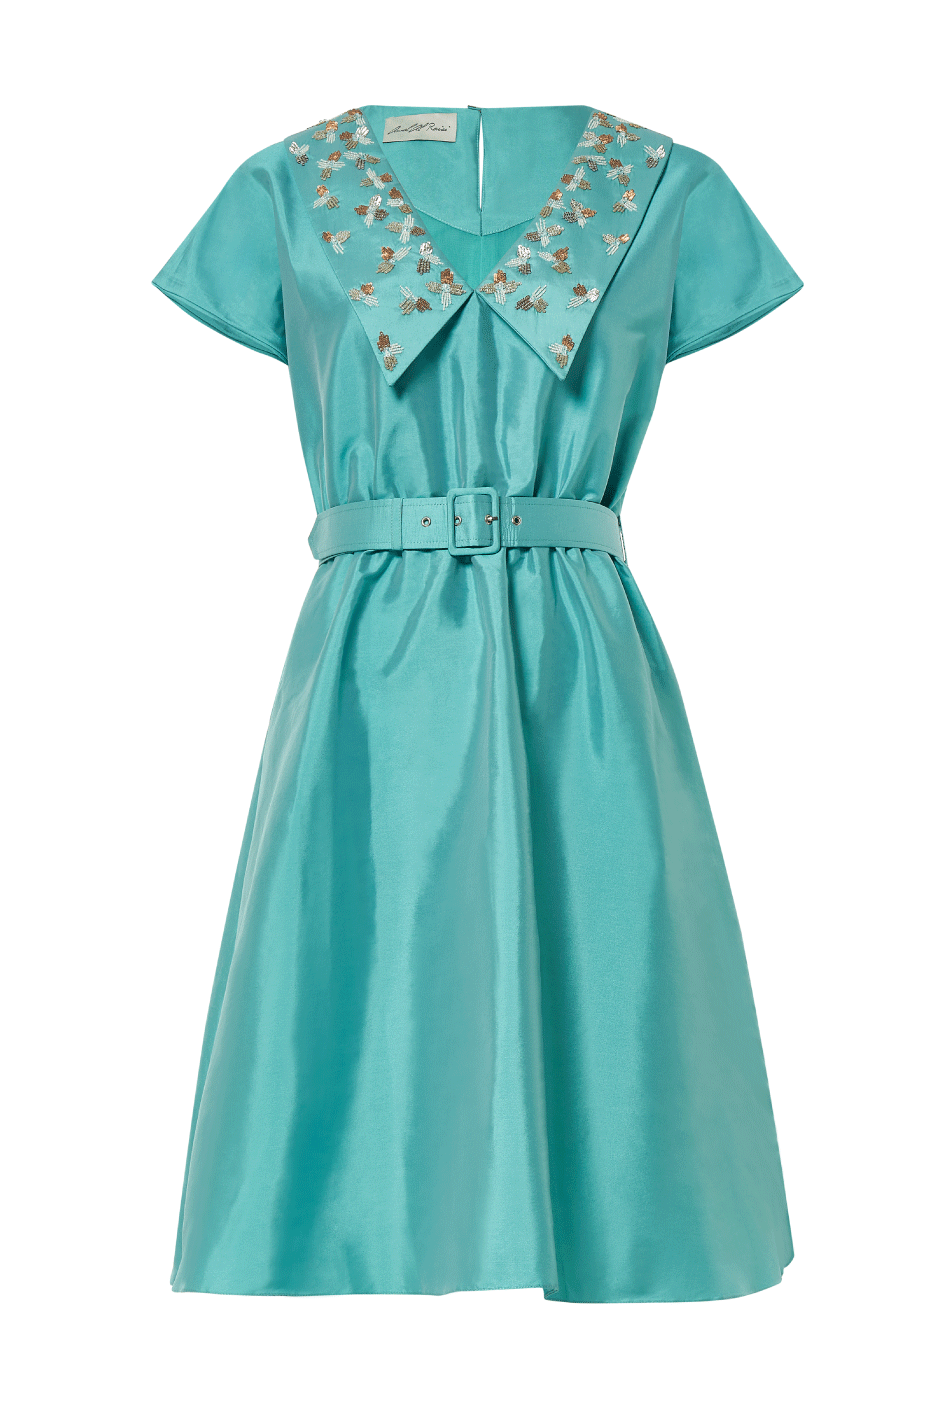 LOOK 06 (Dress)